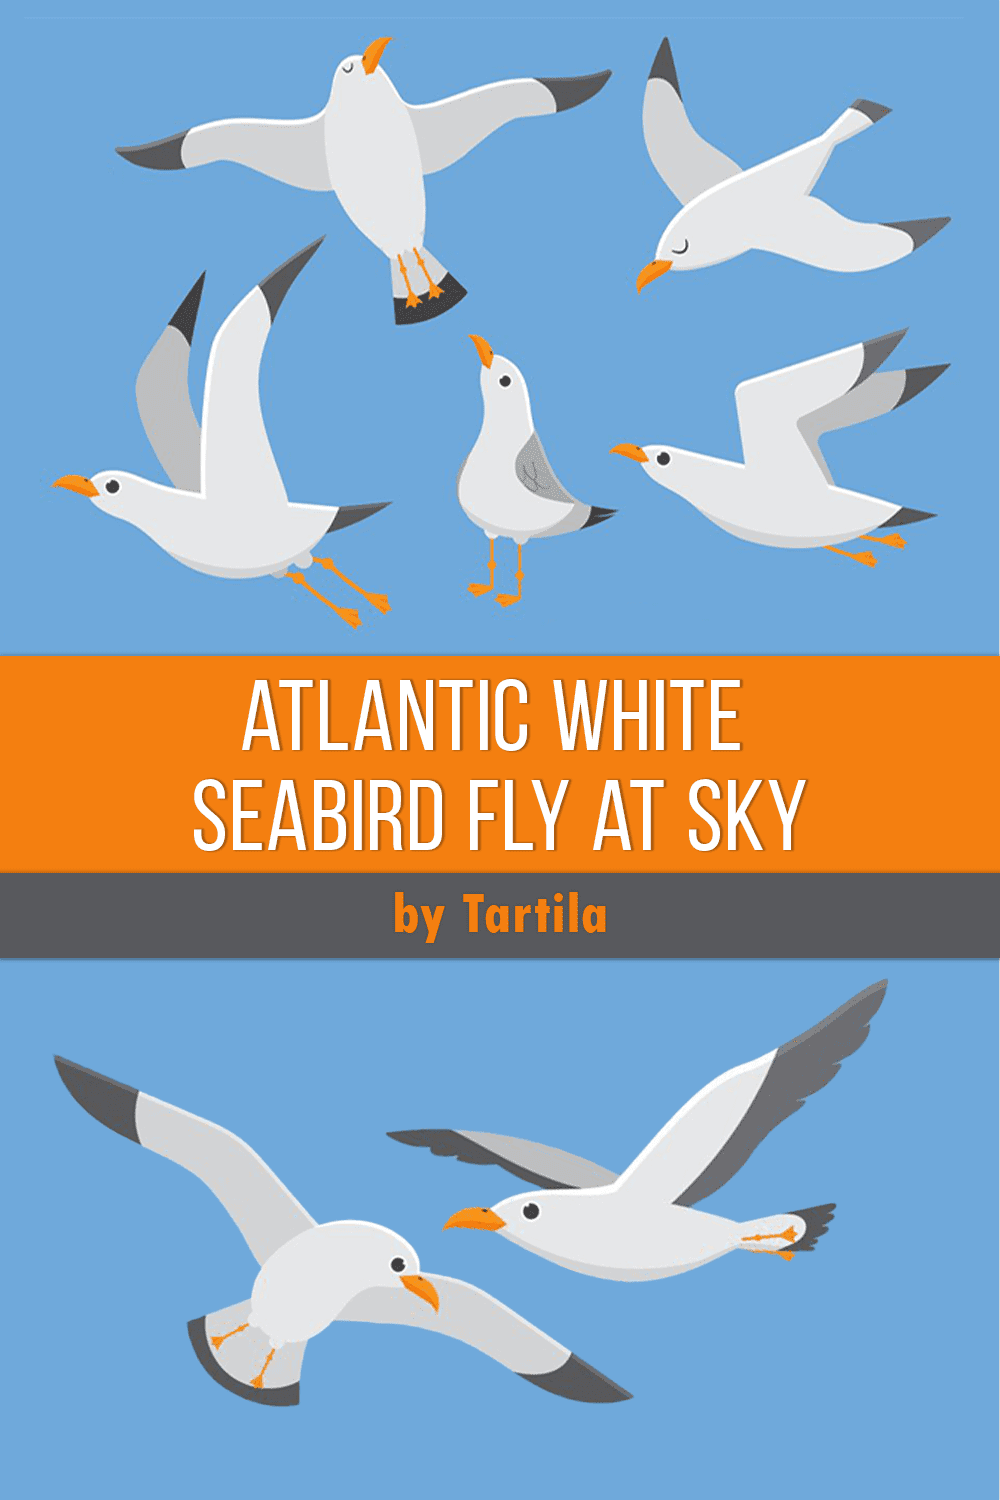 Atlantic white seabird fly at sky. Beach seagull at quay. Pinterest.